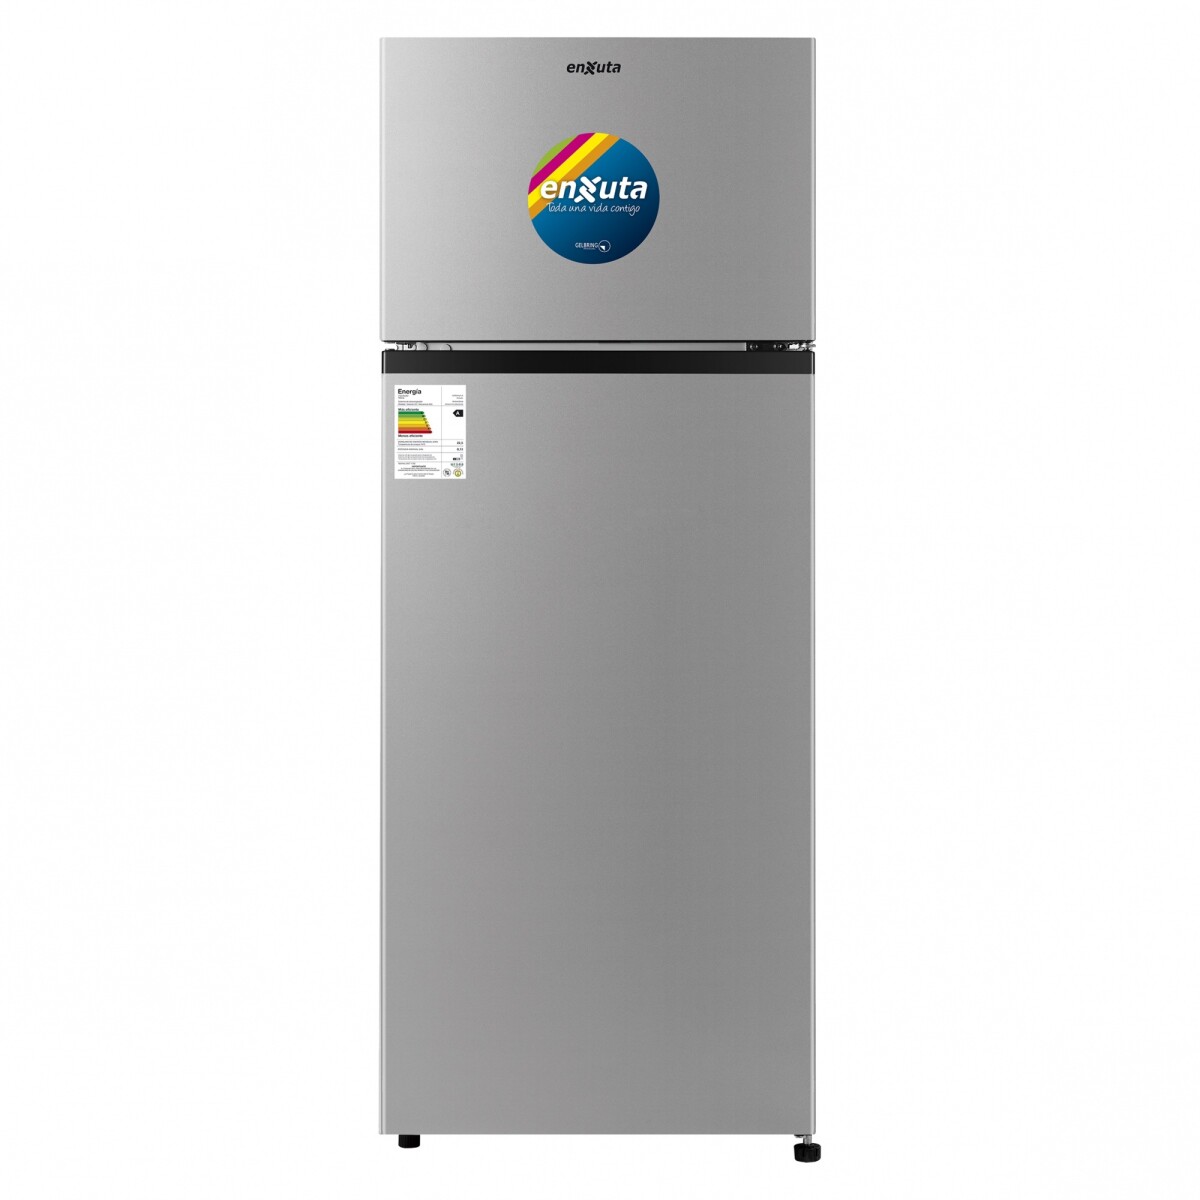 Renx16200sfhs Refrigerador Enxuta 